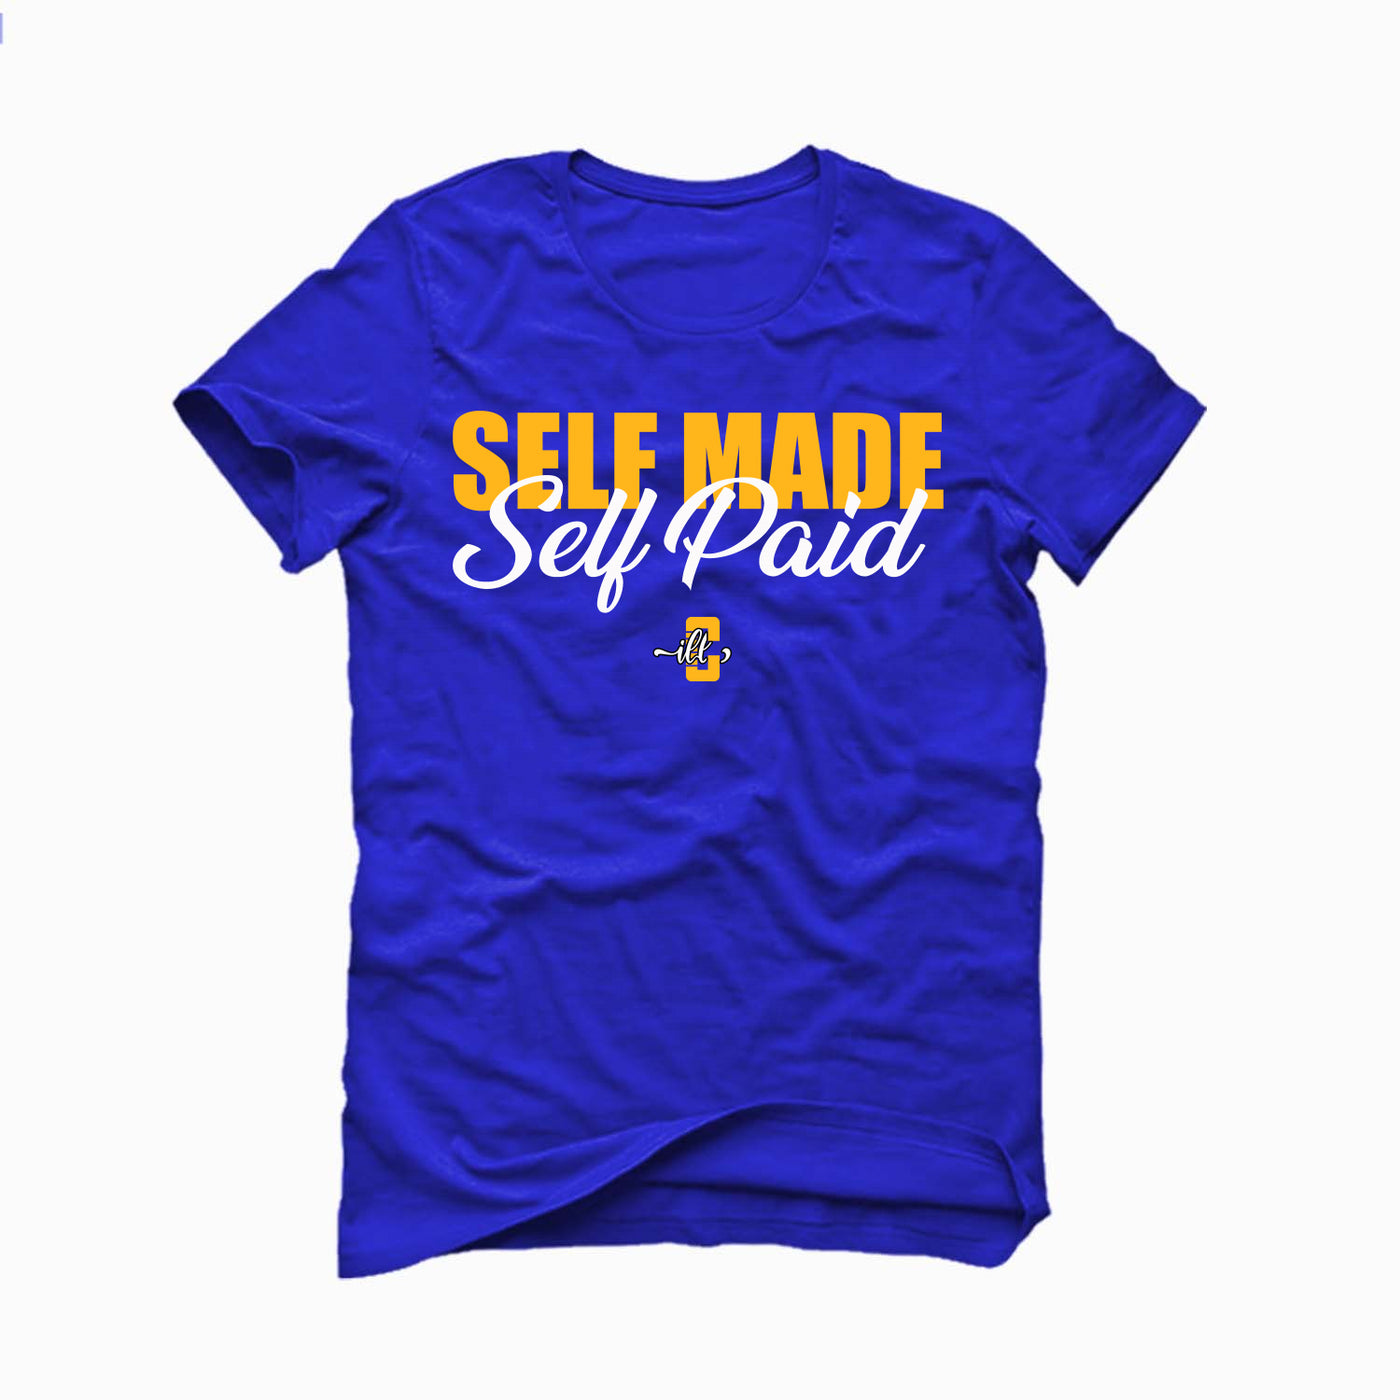 Nike Dunk Low “UCLA” Royal Blue T-Shirt (Self Made Self Paid)